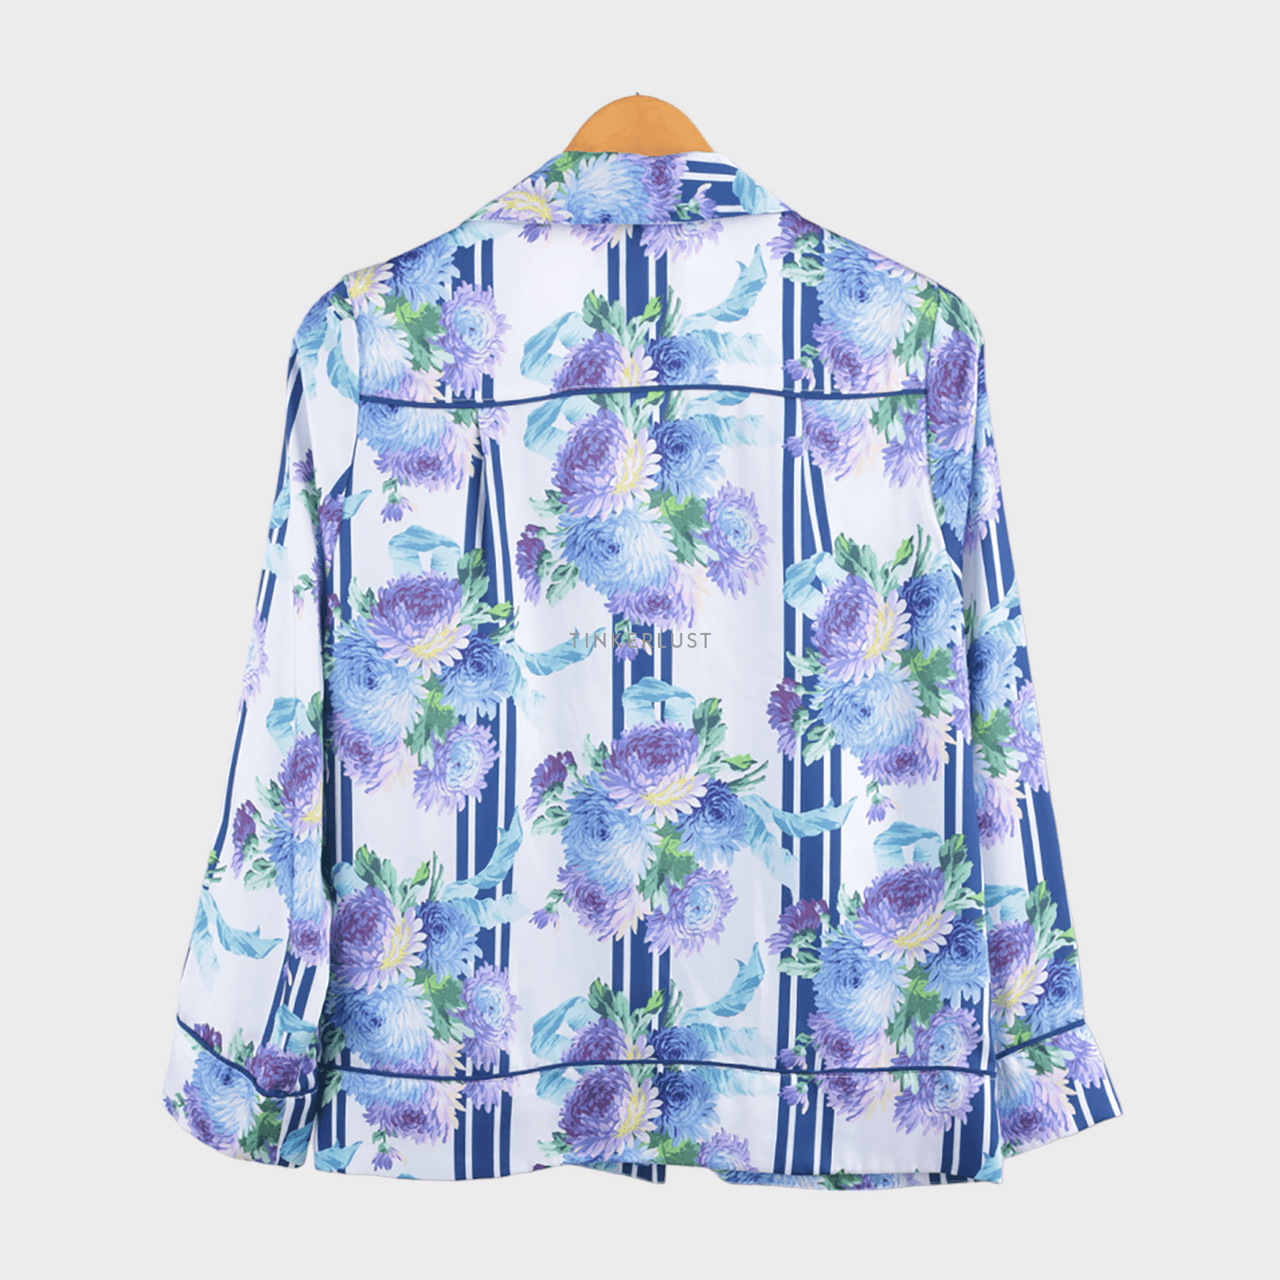 J.CREW Multi Floral Shirt